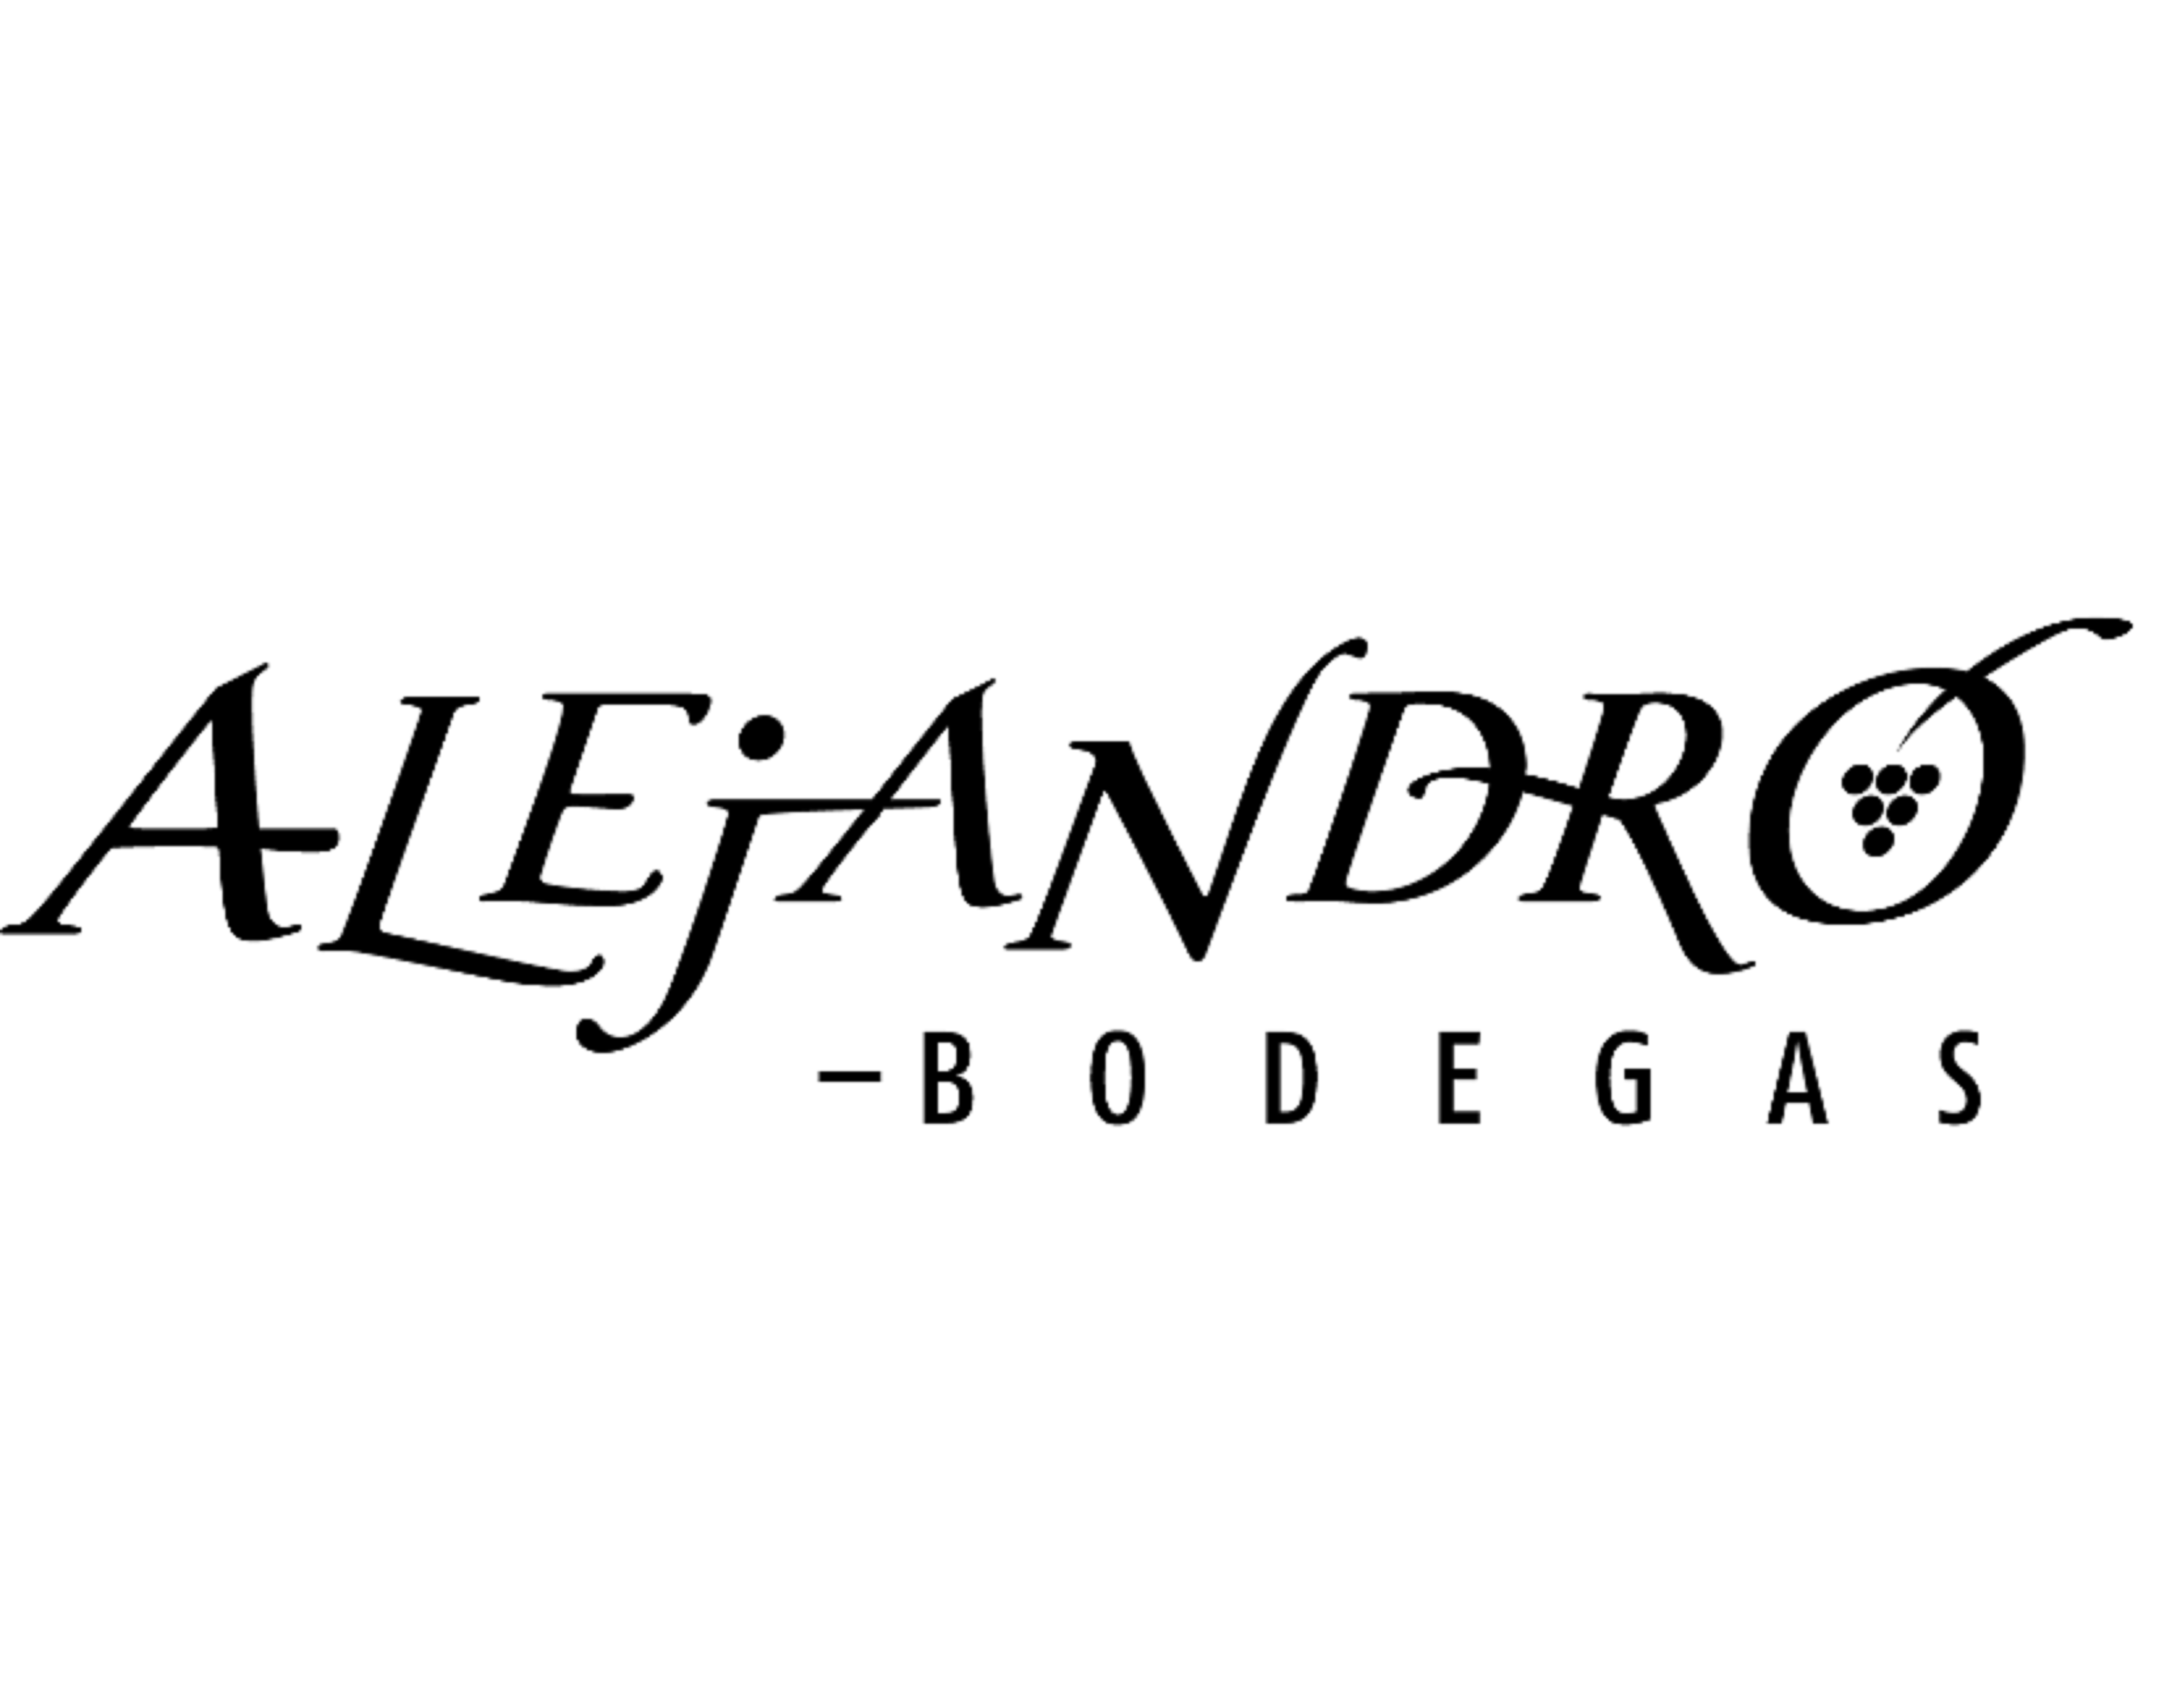 Bodegas Alejandro